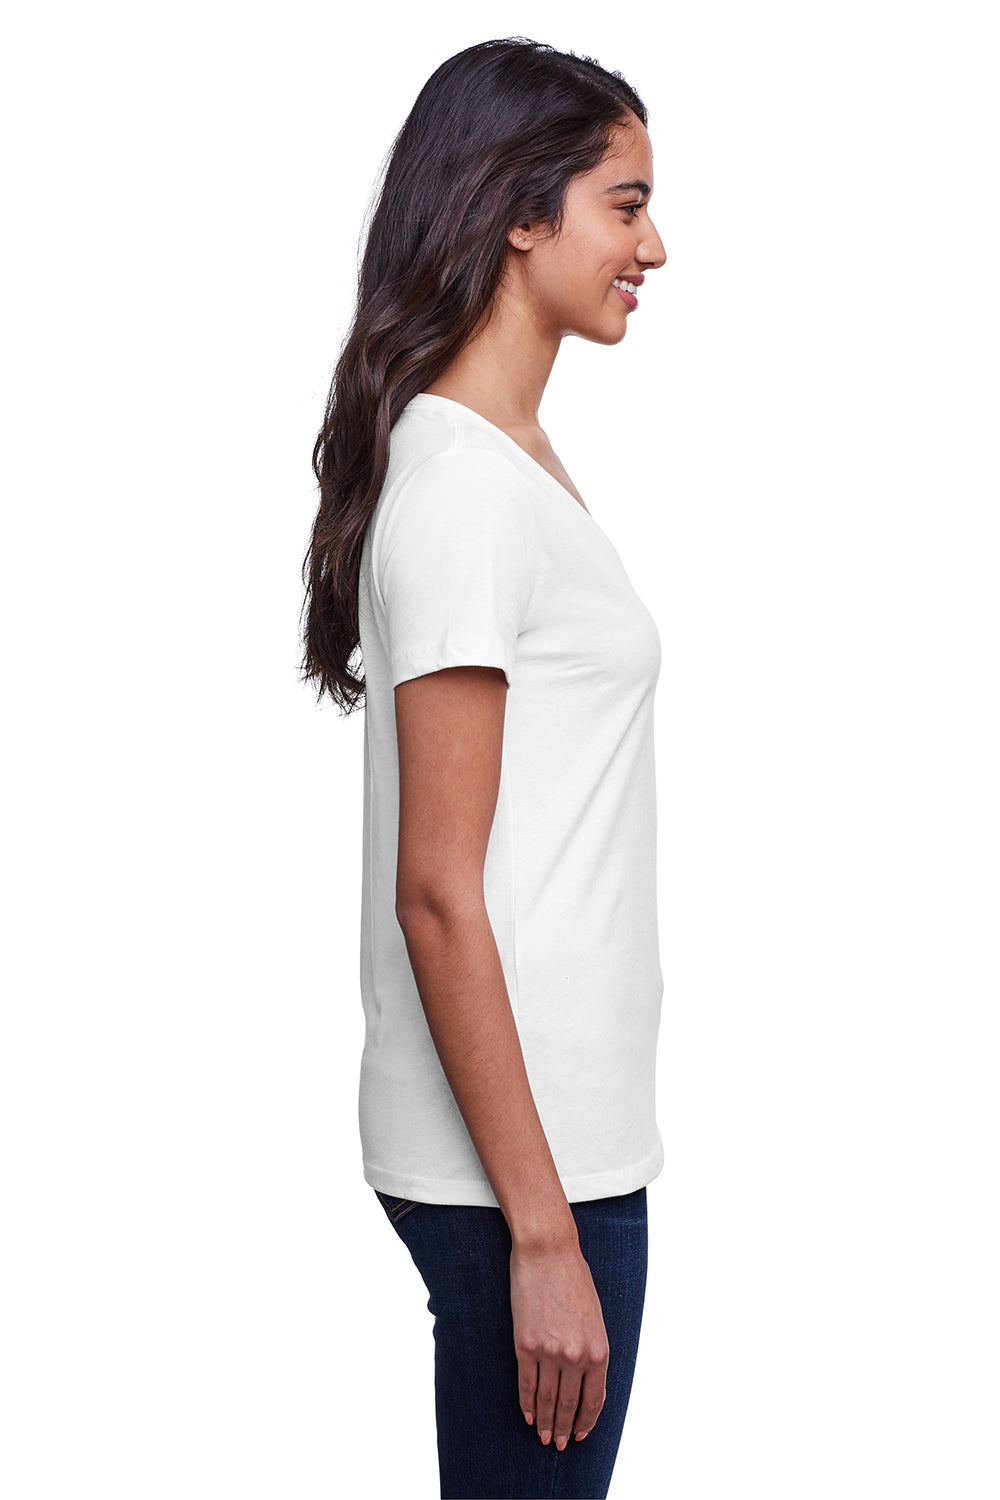 Next Level N4240 Womens Eco Performance Moisture Wicking Short Sleeve V-Neck T-Shirt White Side